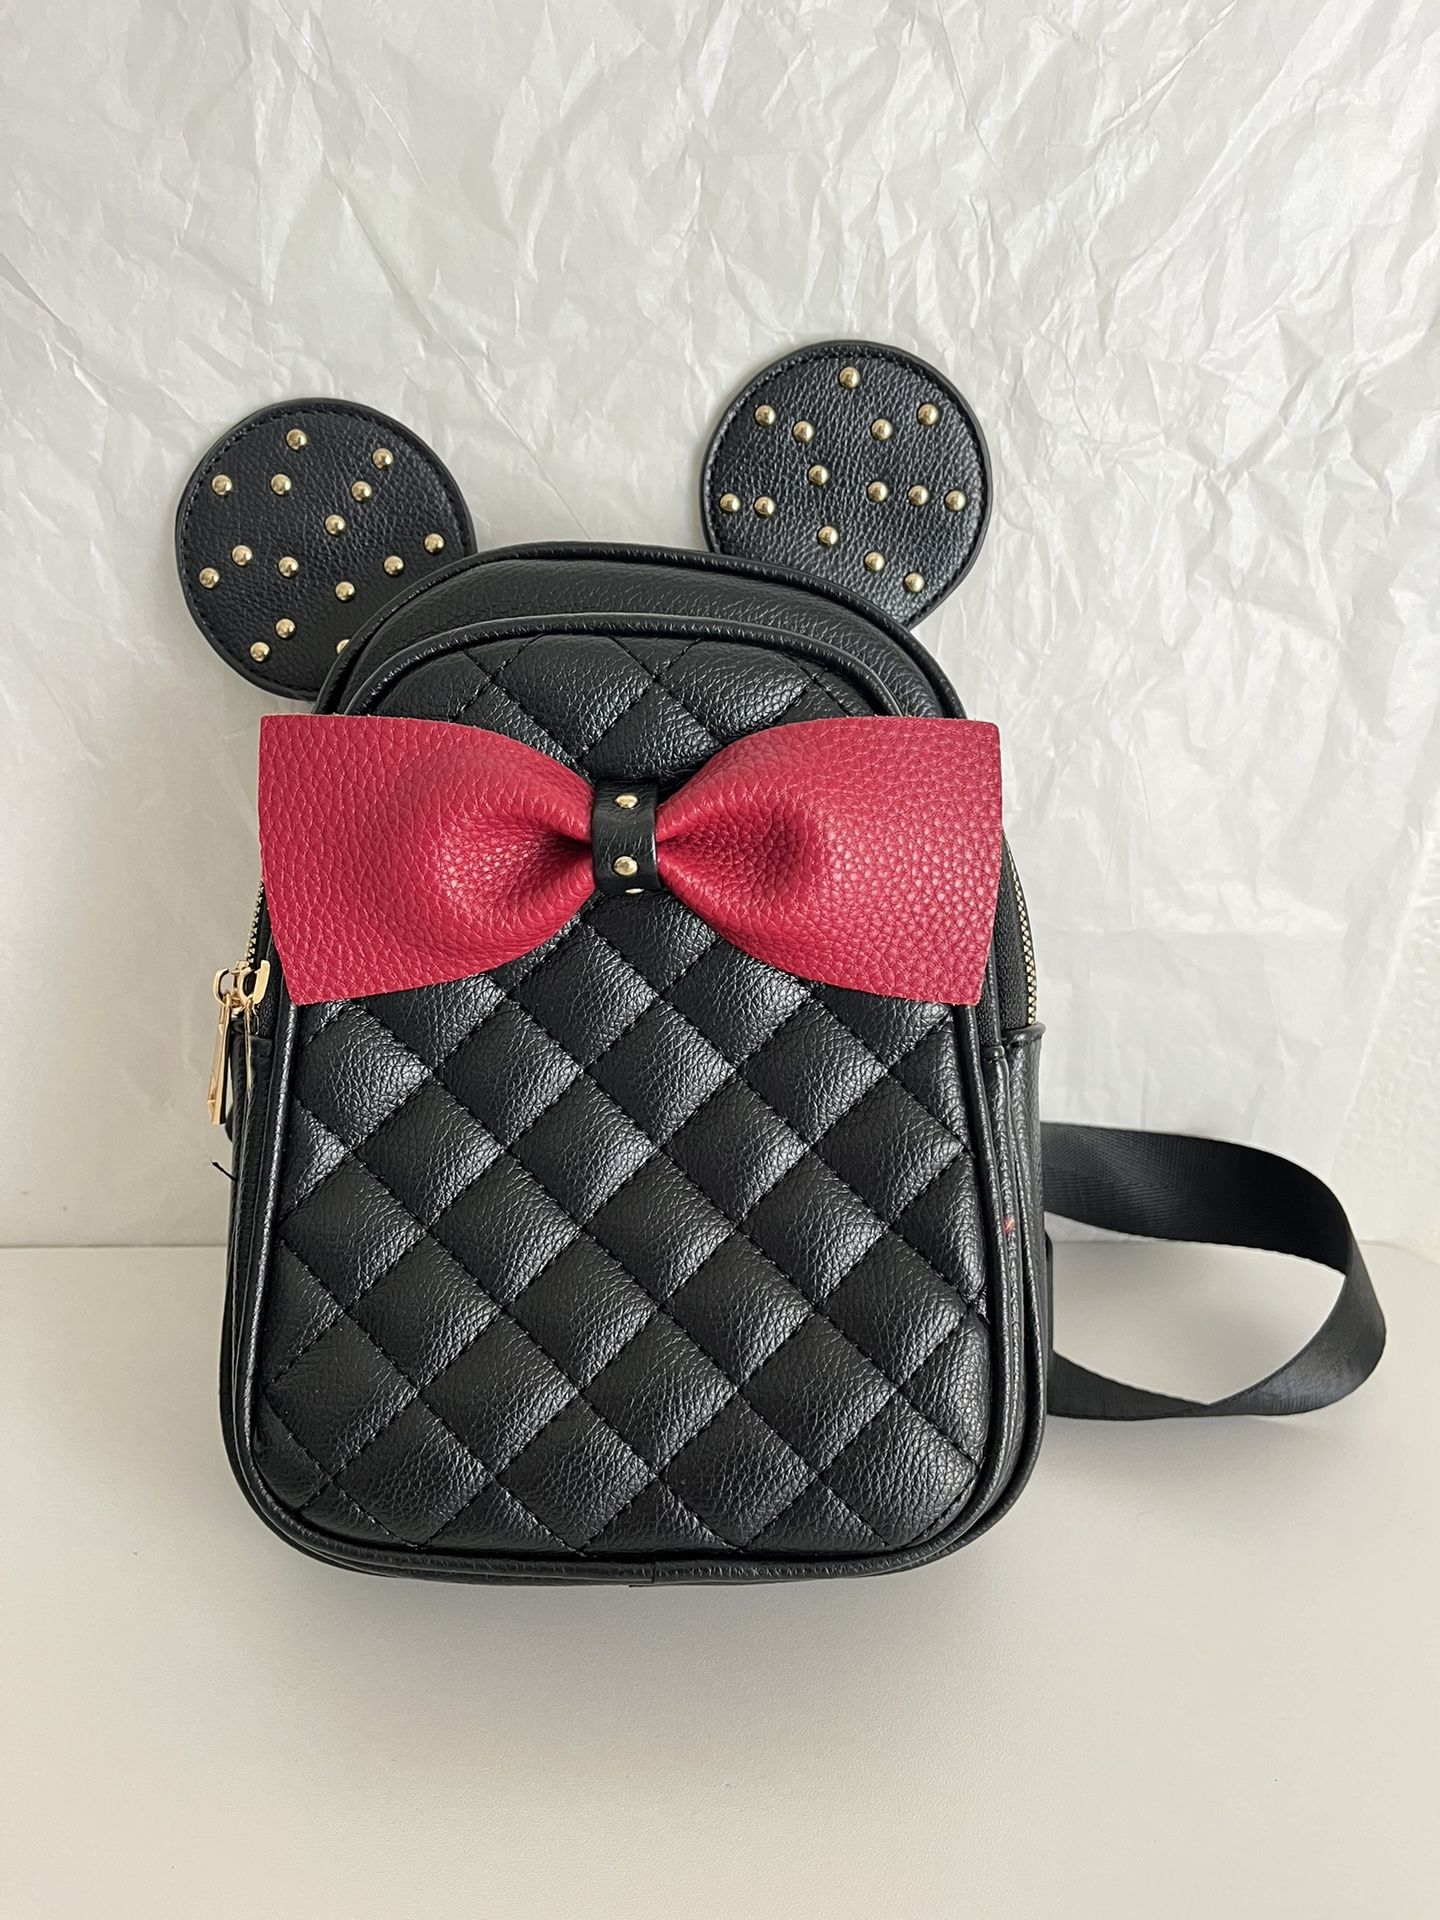 Minnie Mouse Handbag